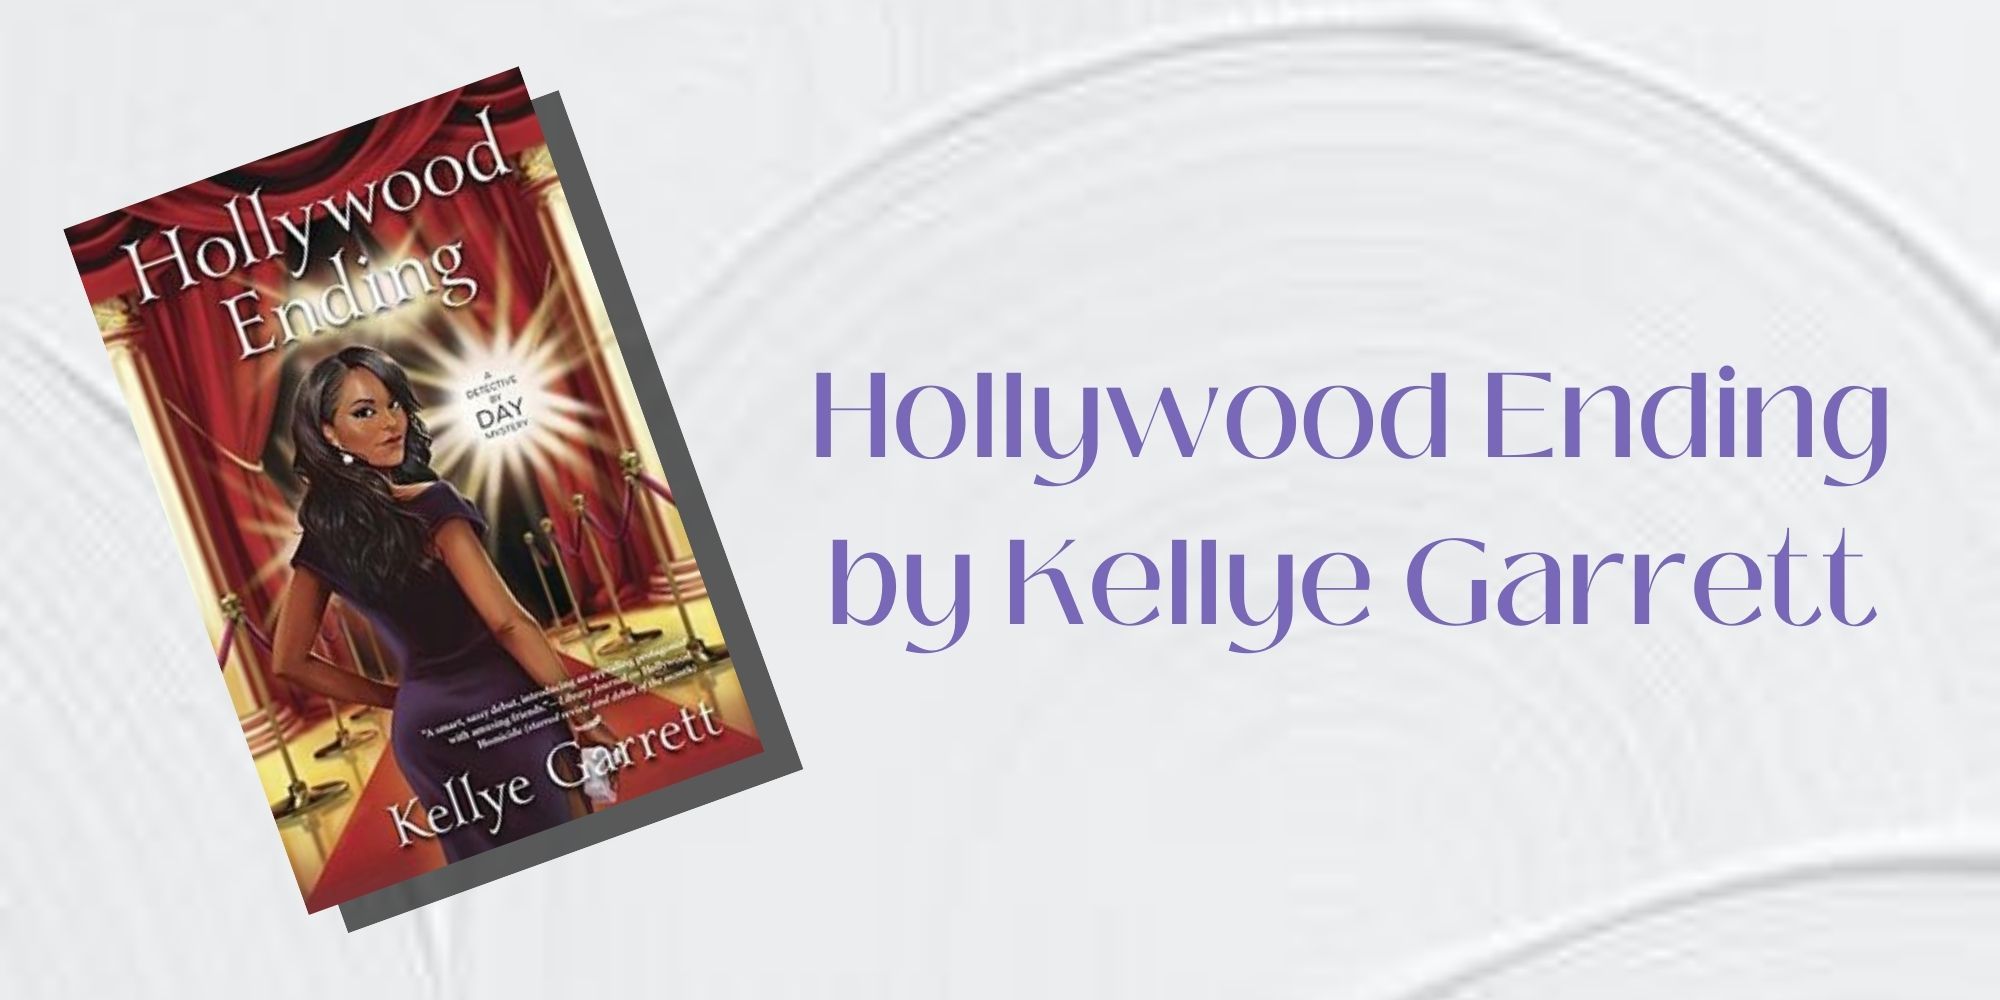 The cover of Hollywood Ending by Kellye Garrett